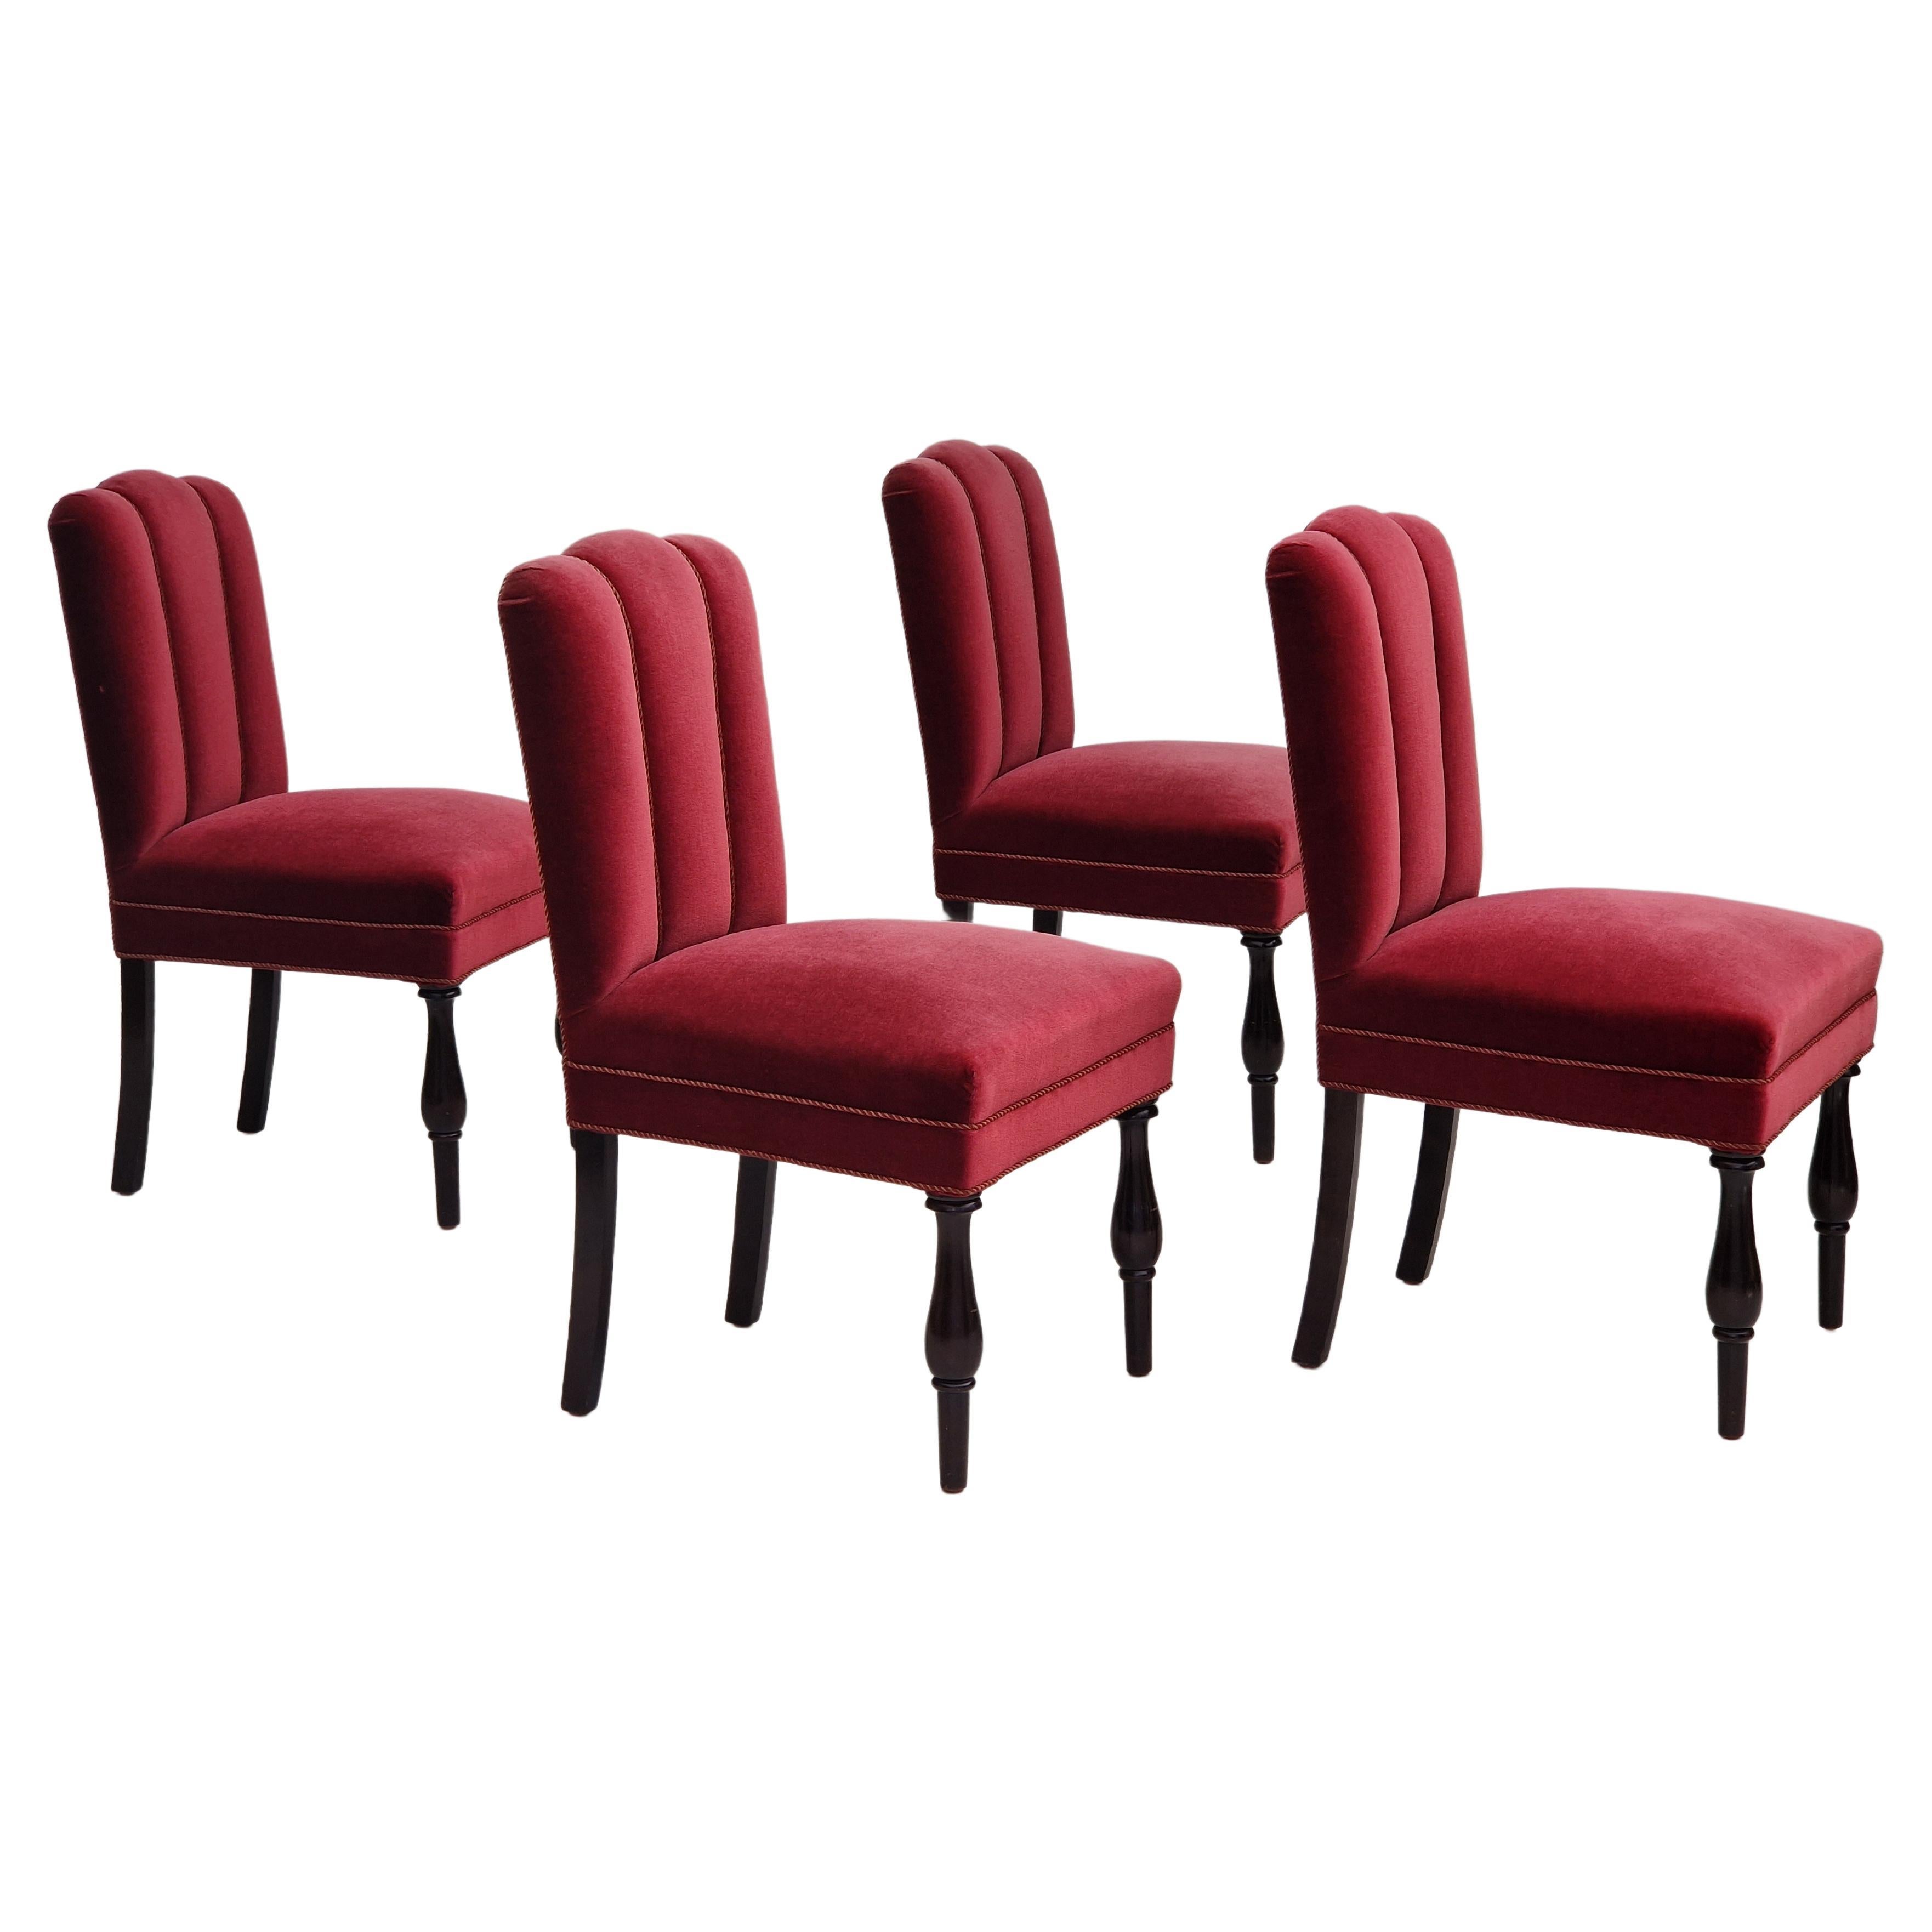 1950s, Danish Design, Set of 4 Dinning Chairs, Oak Wood, Cherry-Red Velour